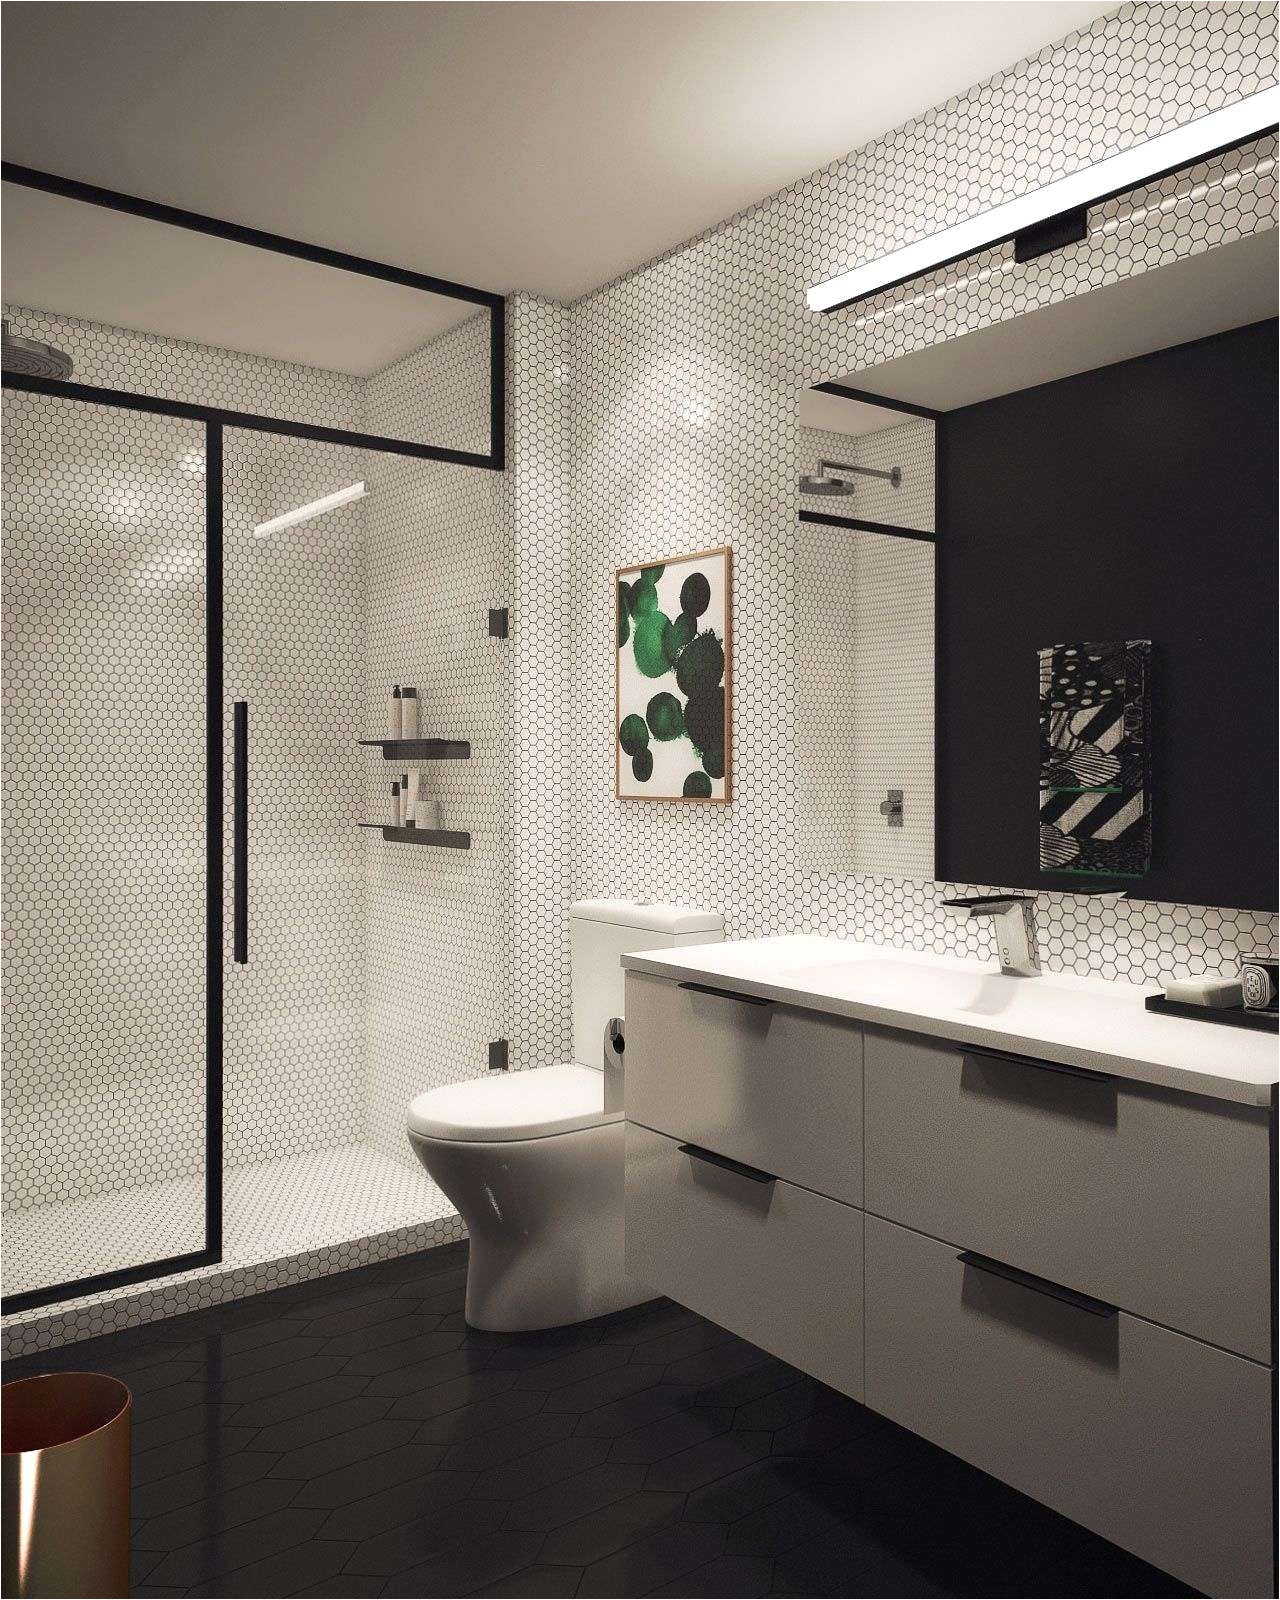 Magnificent Bathroom Wall Tile Ideas For Small Bathrooms Lovely Small Bathroom Lighting Fresh Tag Toilet Ideas 0d Best Design